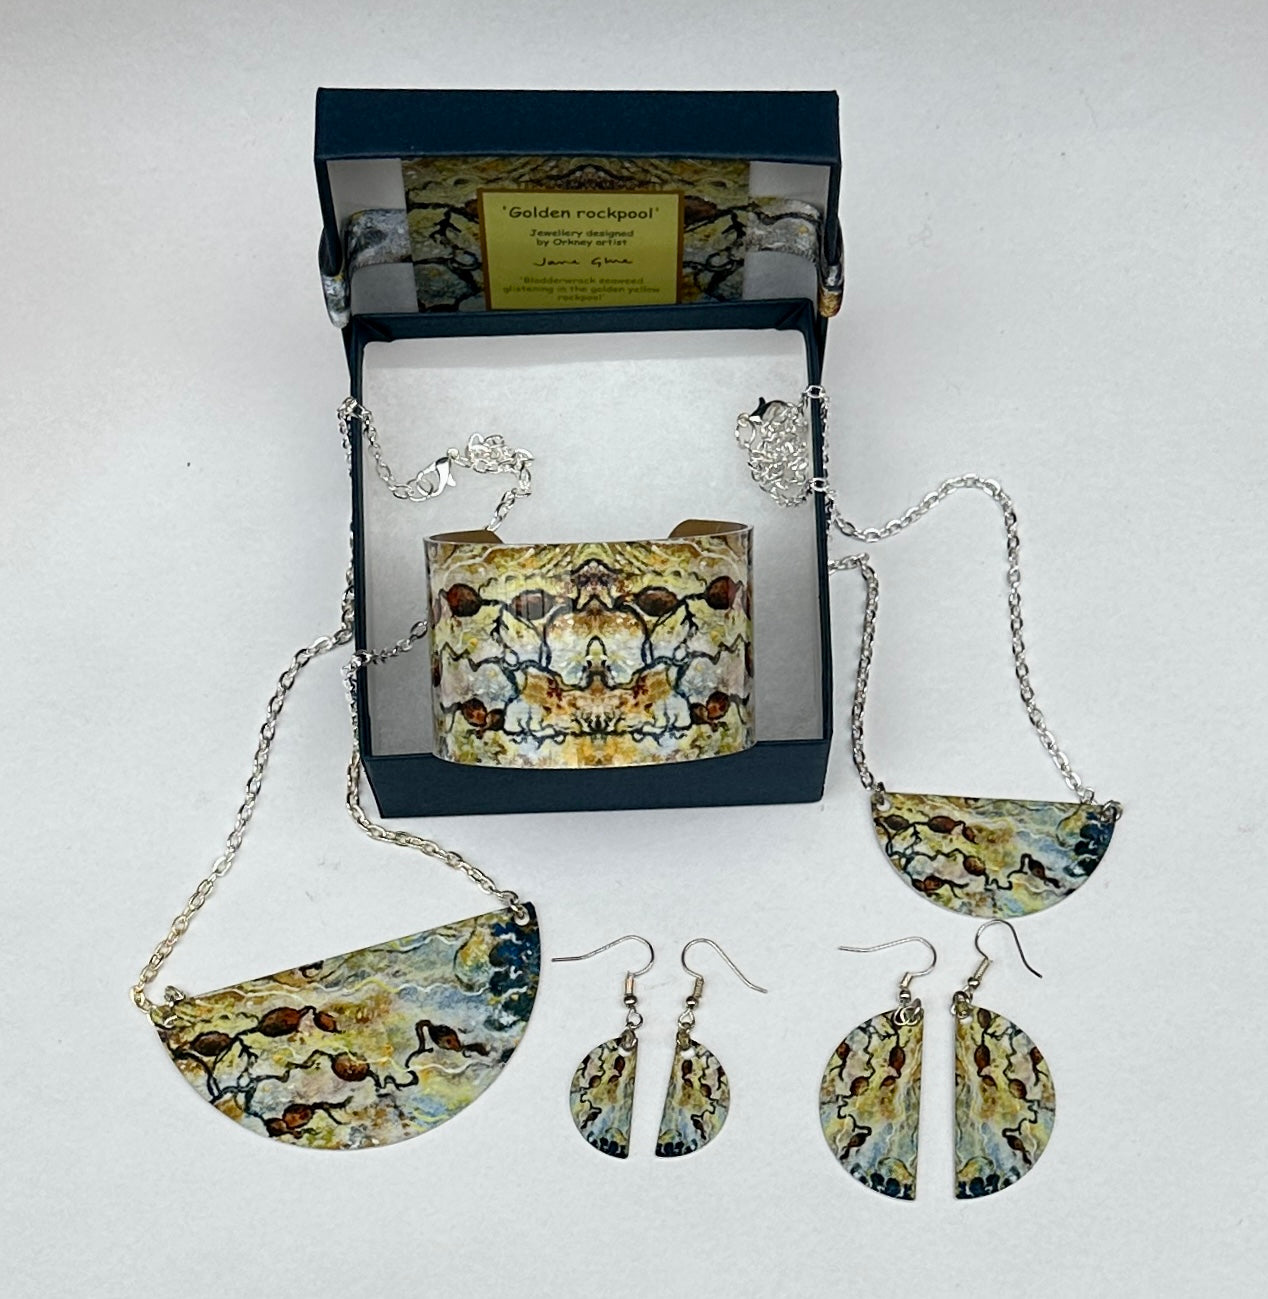 Jewellery by Jane Glue, 'Golden rockpool' Pendant/small semi-circle